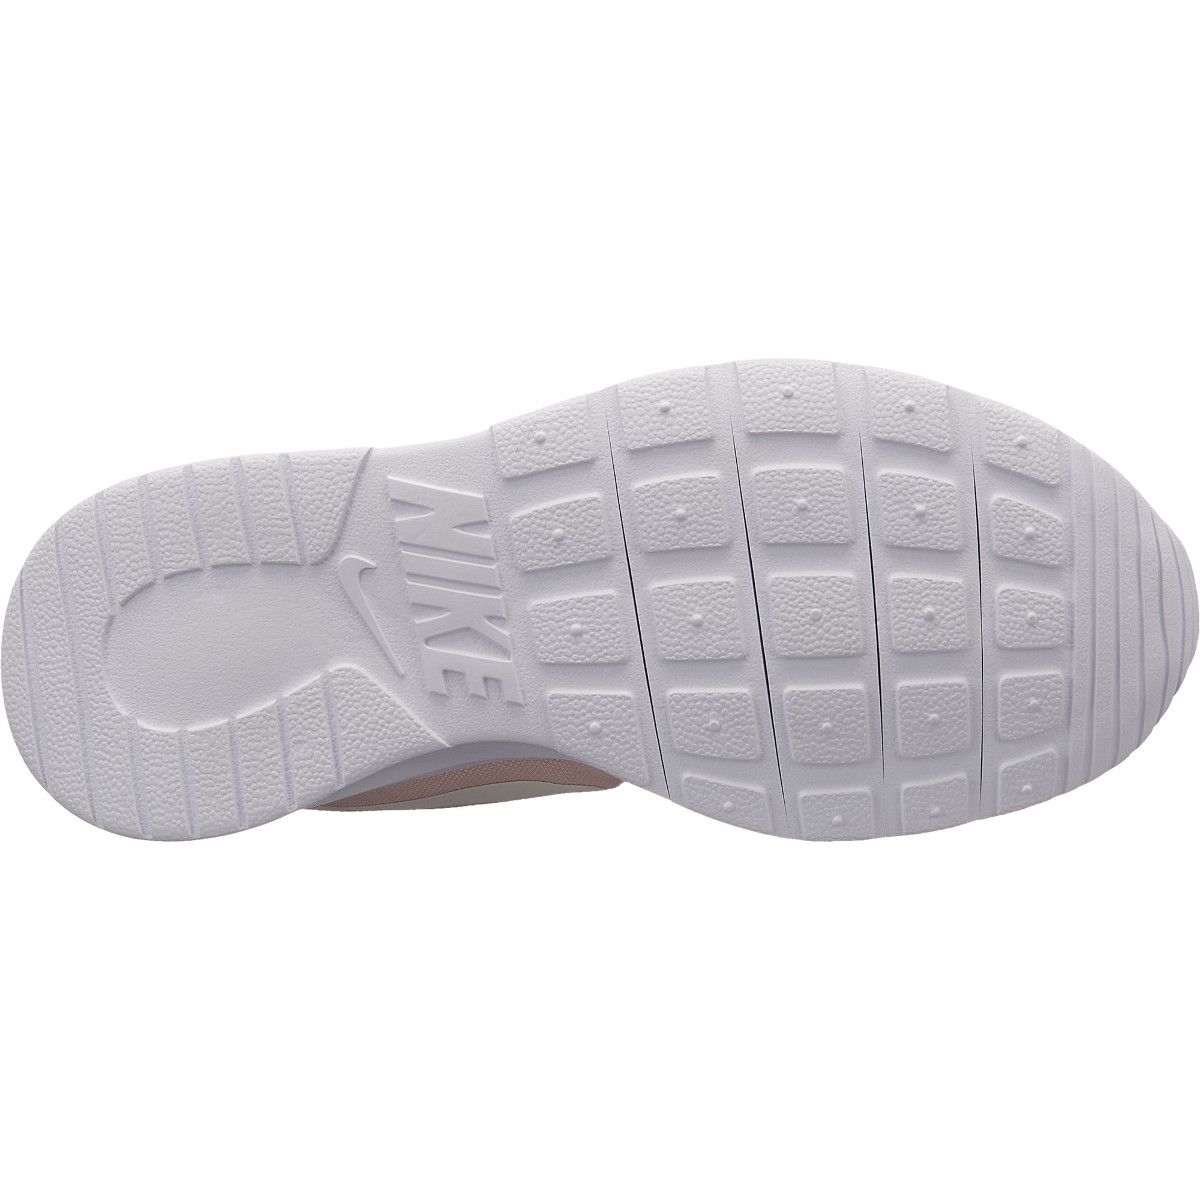 Nike Tanjun SE (GS) Girls' Sports Shoes 859617-800